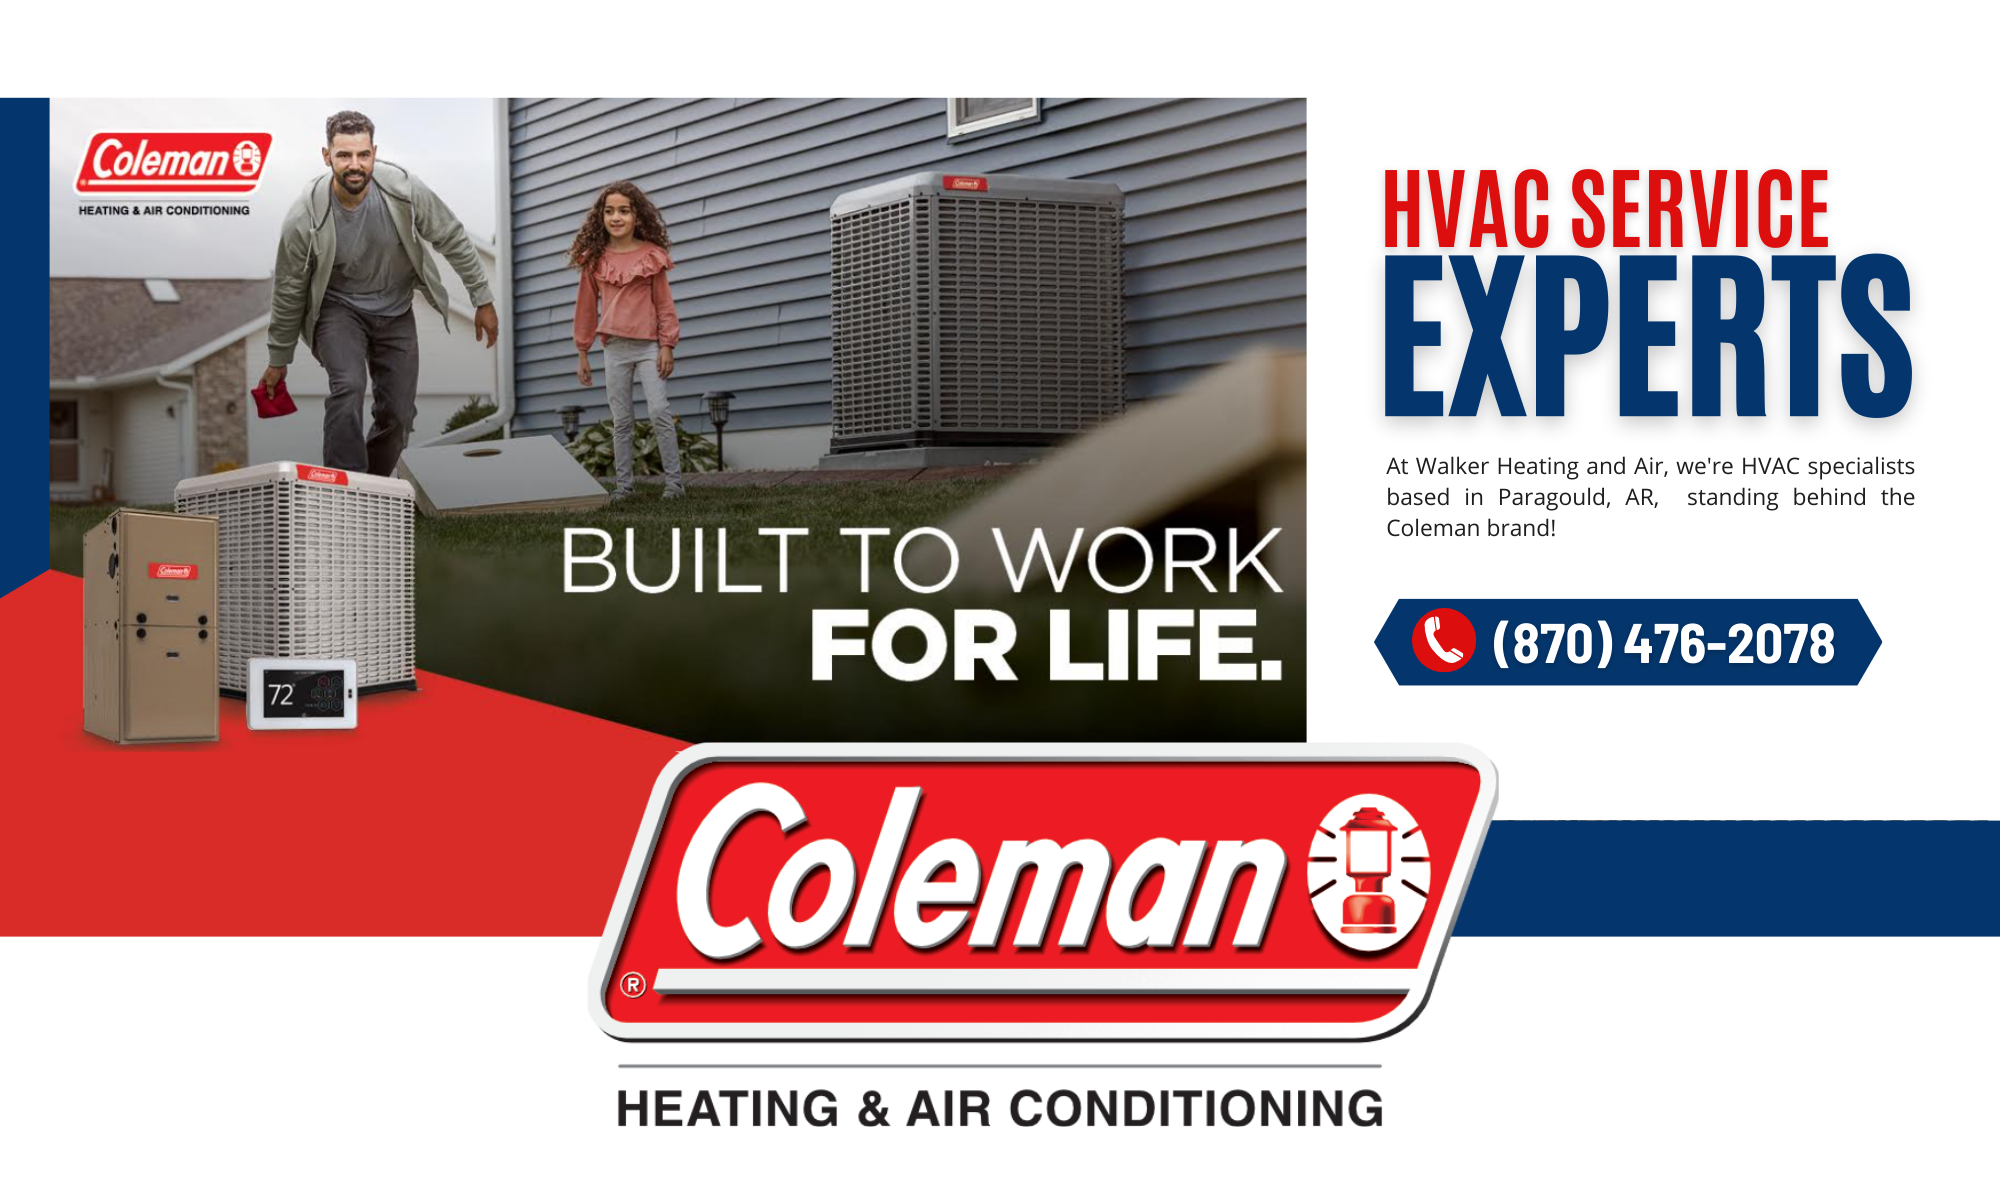 Coleman HVAC experts